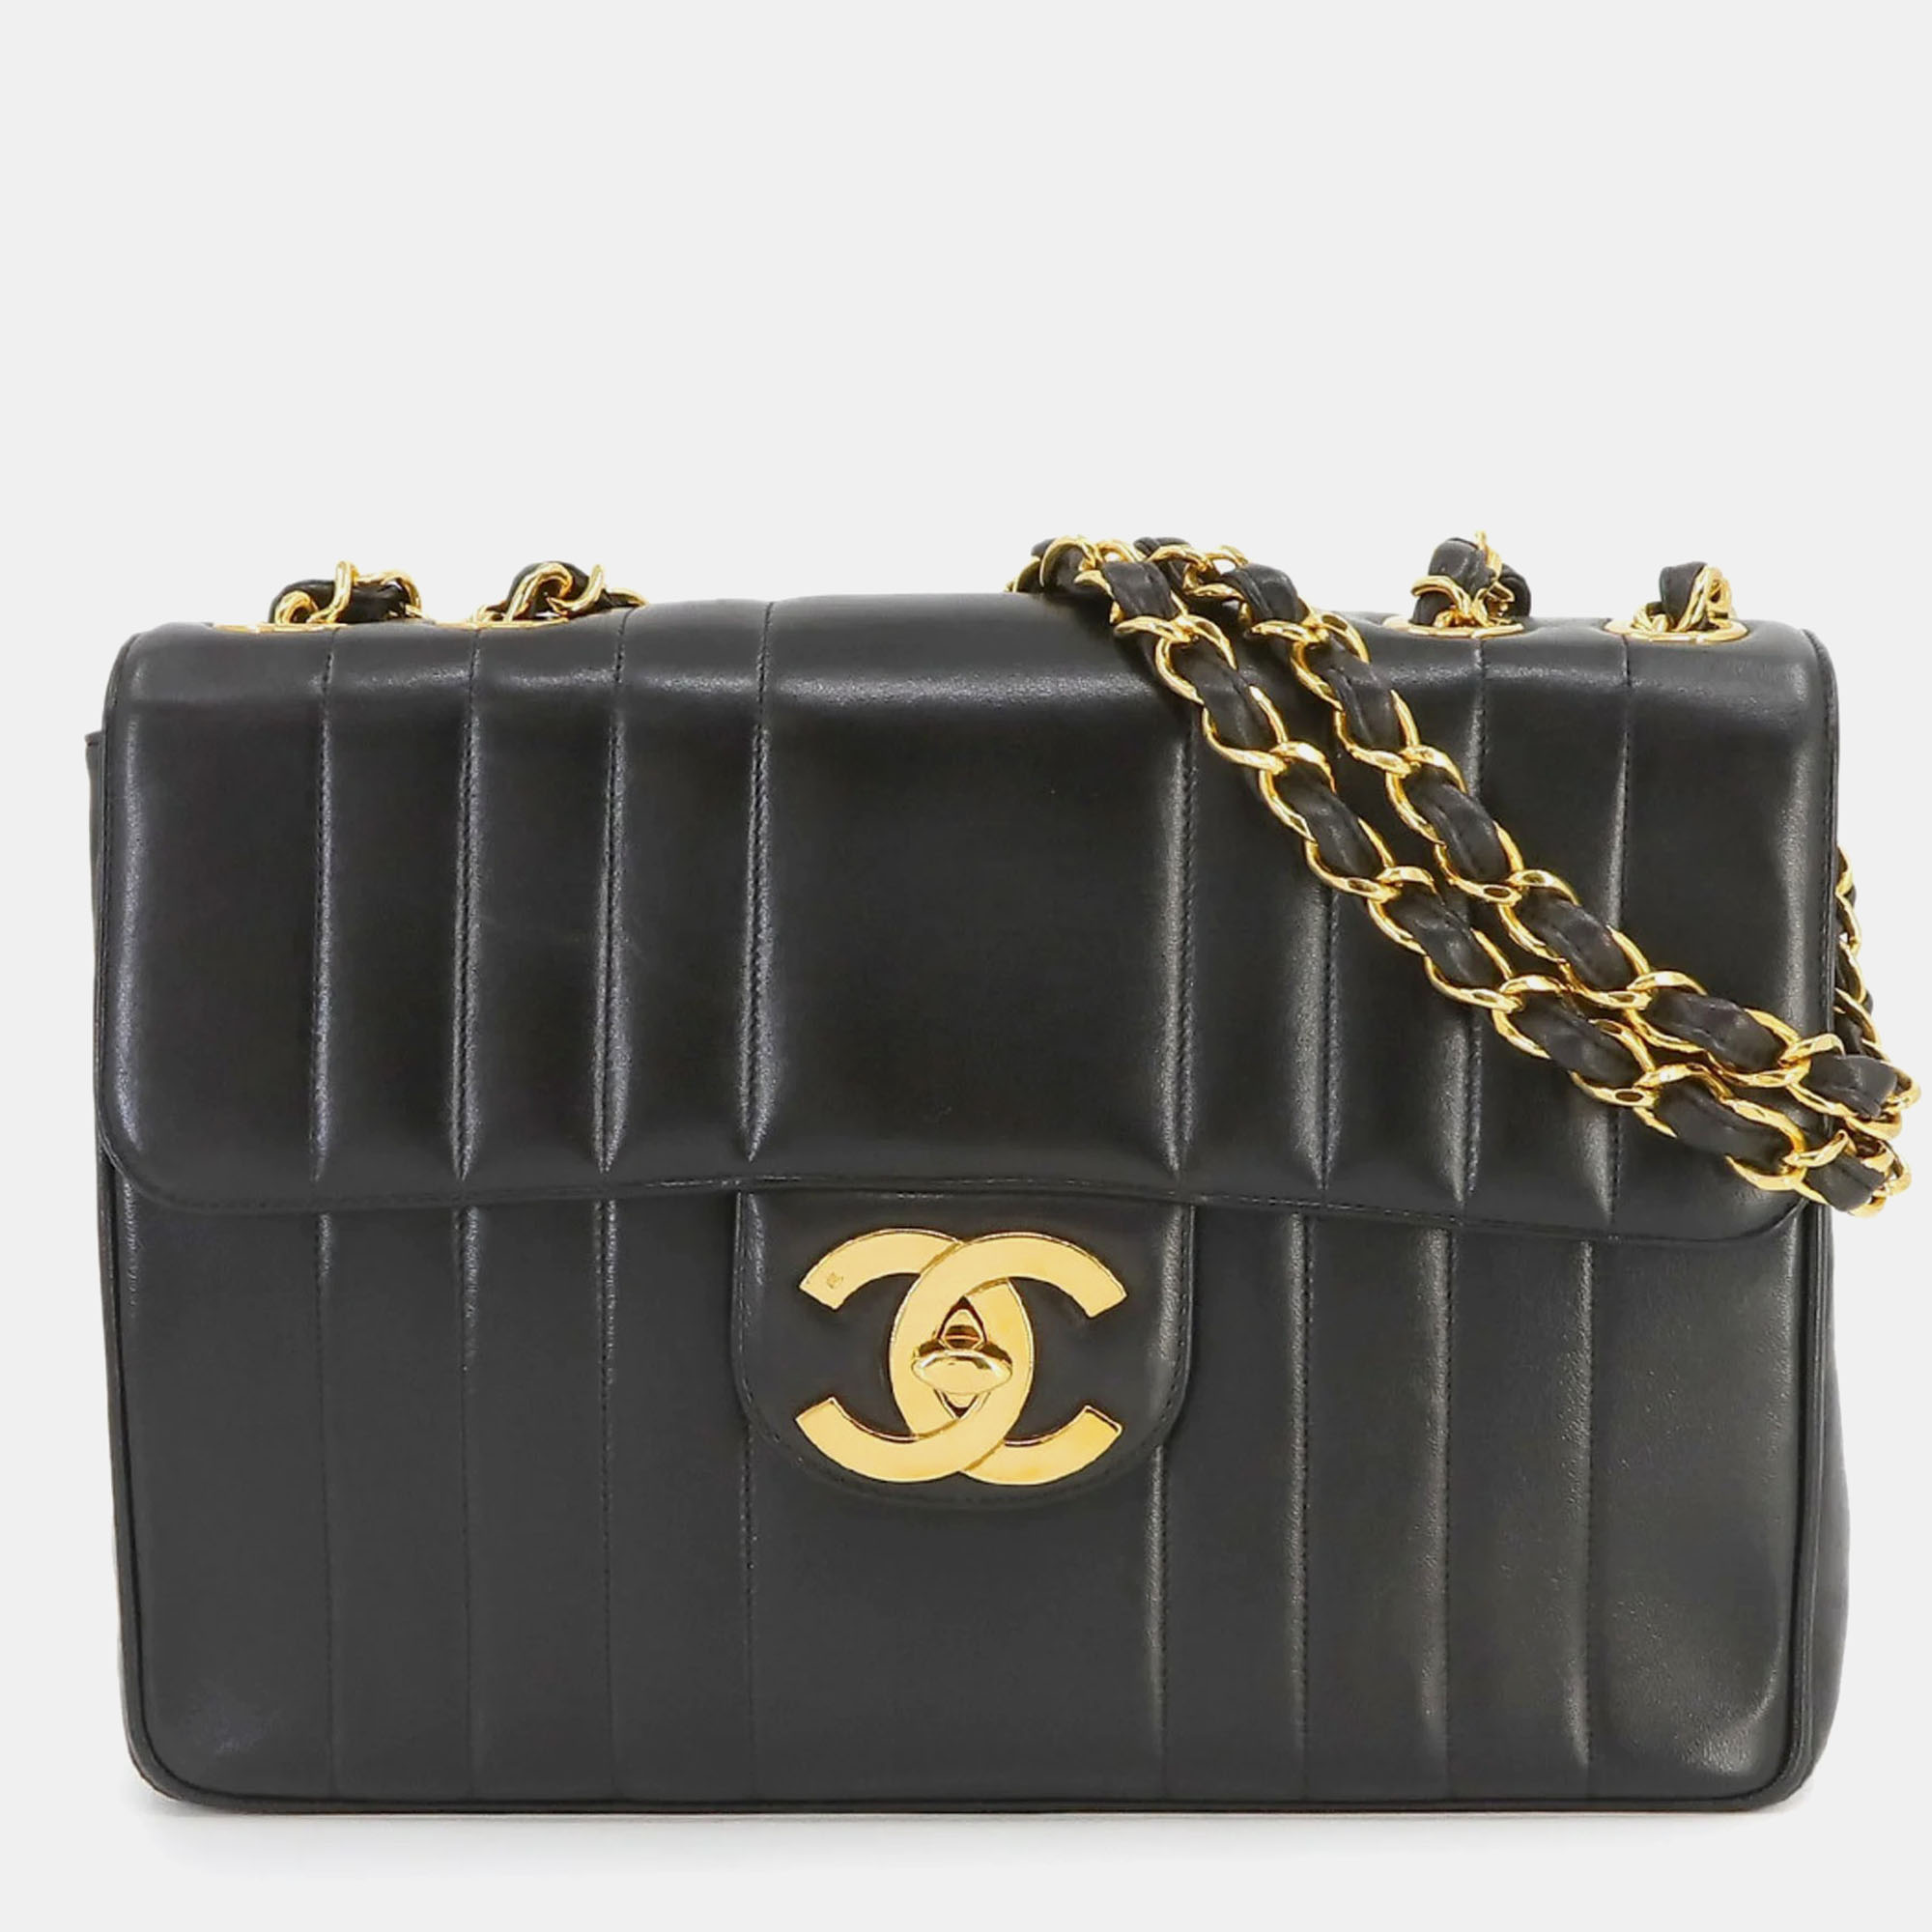 Chanel black leather mademoiselle ligne flap bag